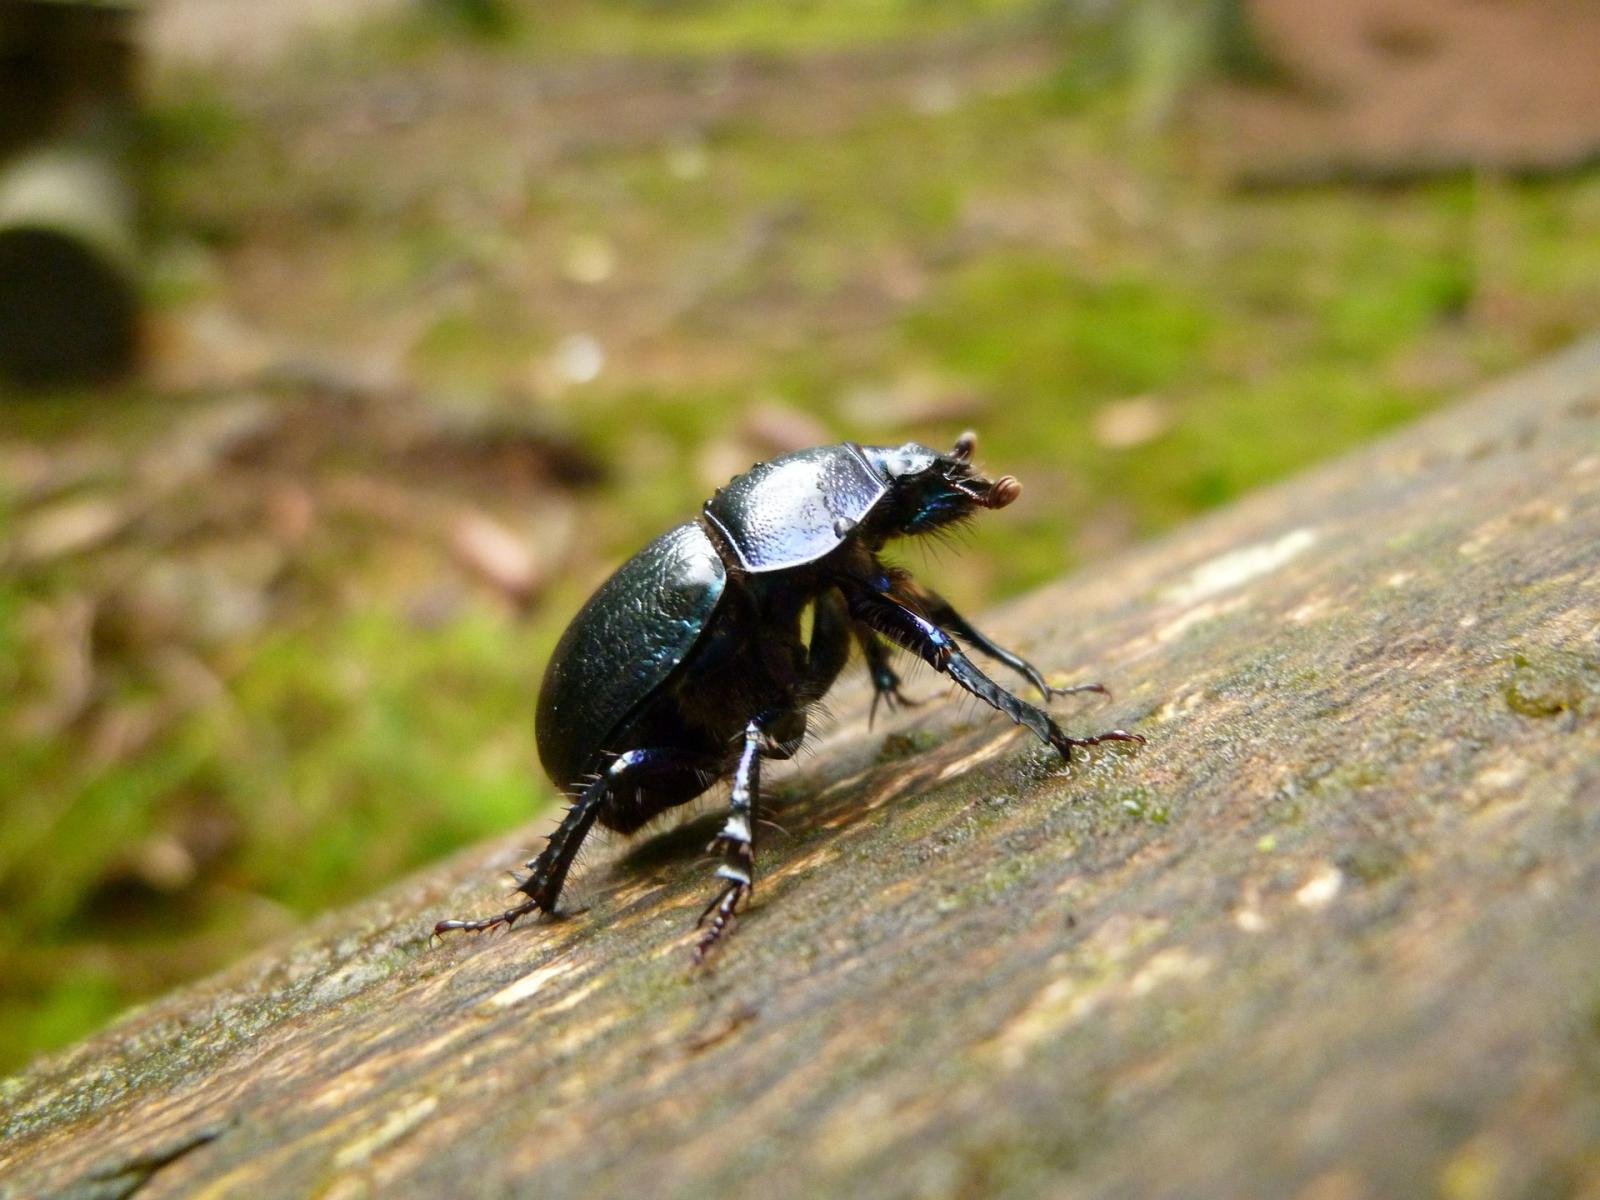 Dung beetle on a tree. Credit: Pixabay.